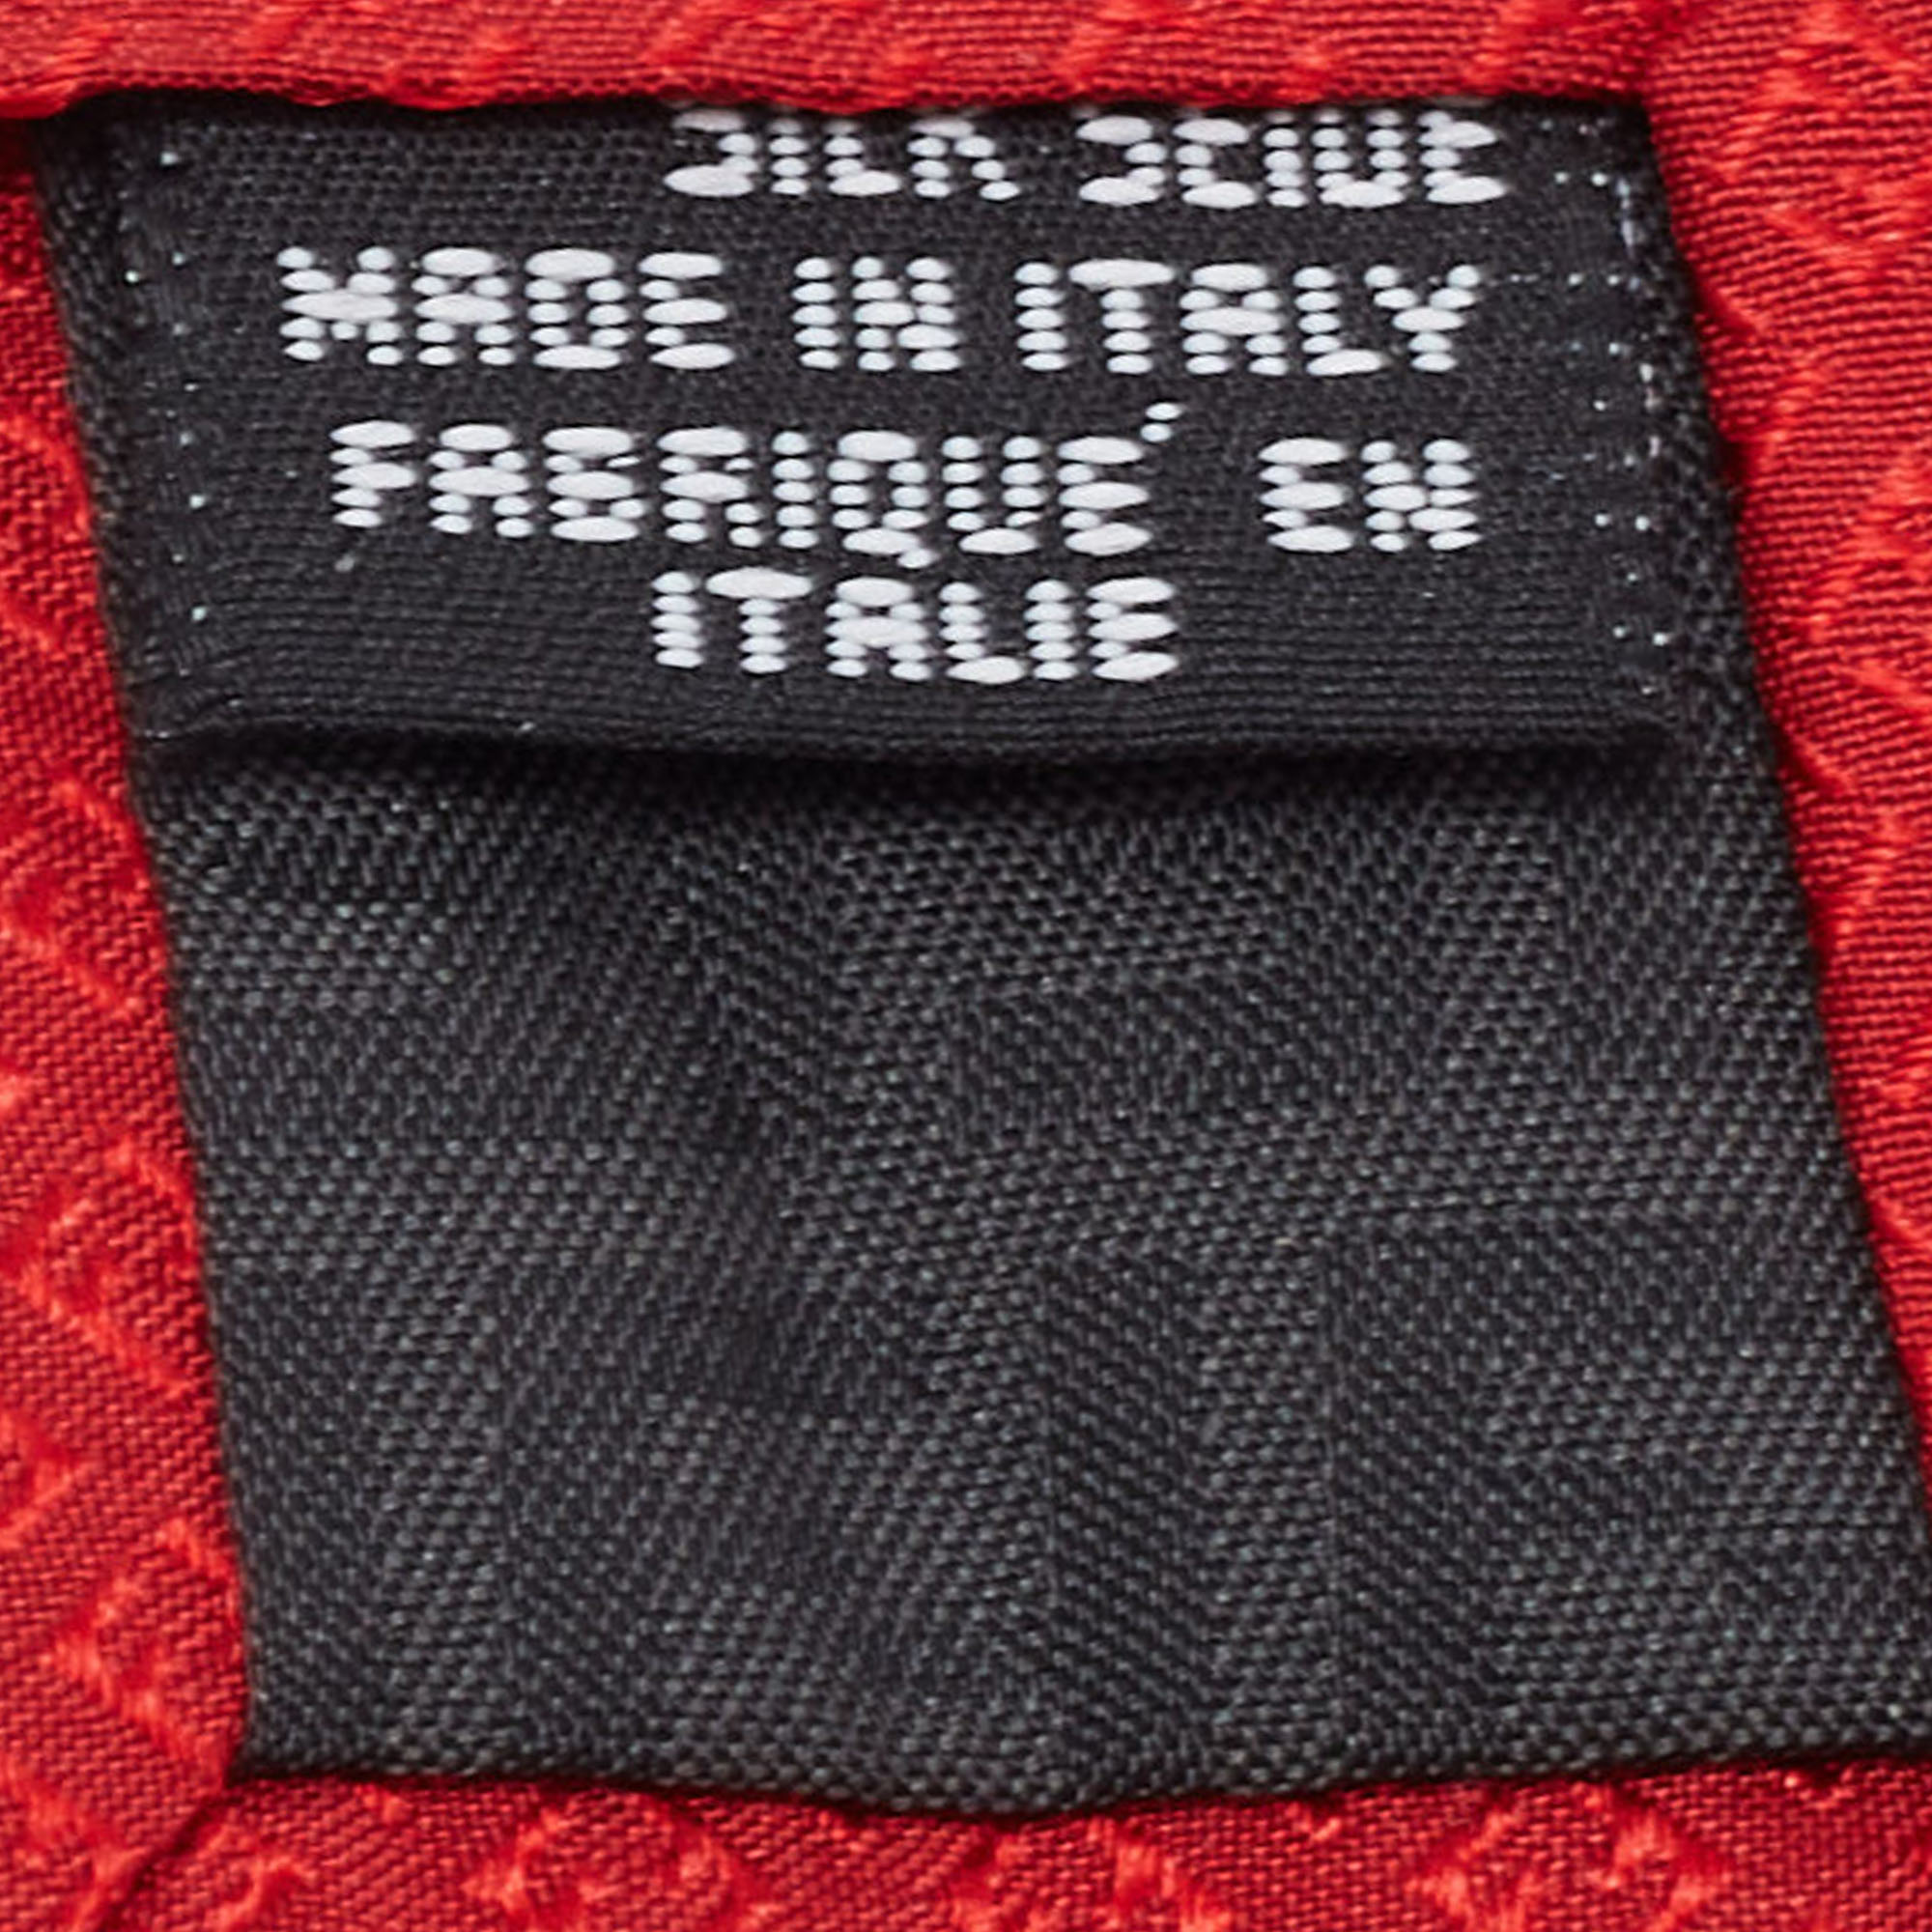 Fendi Red FF Patterned Silk Tie